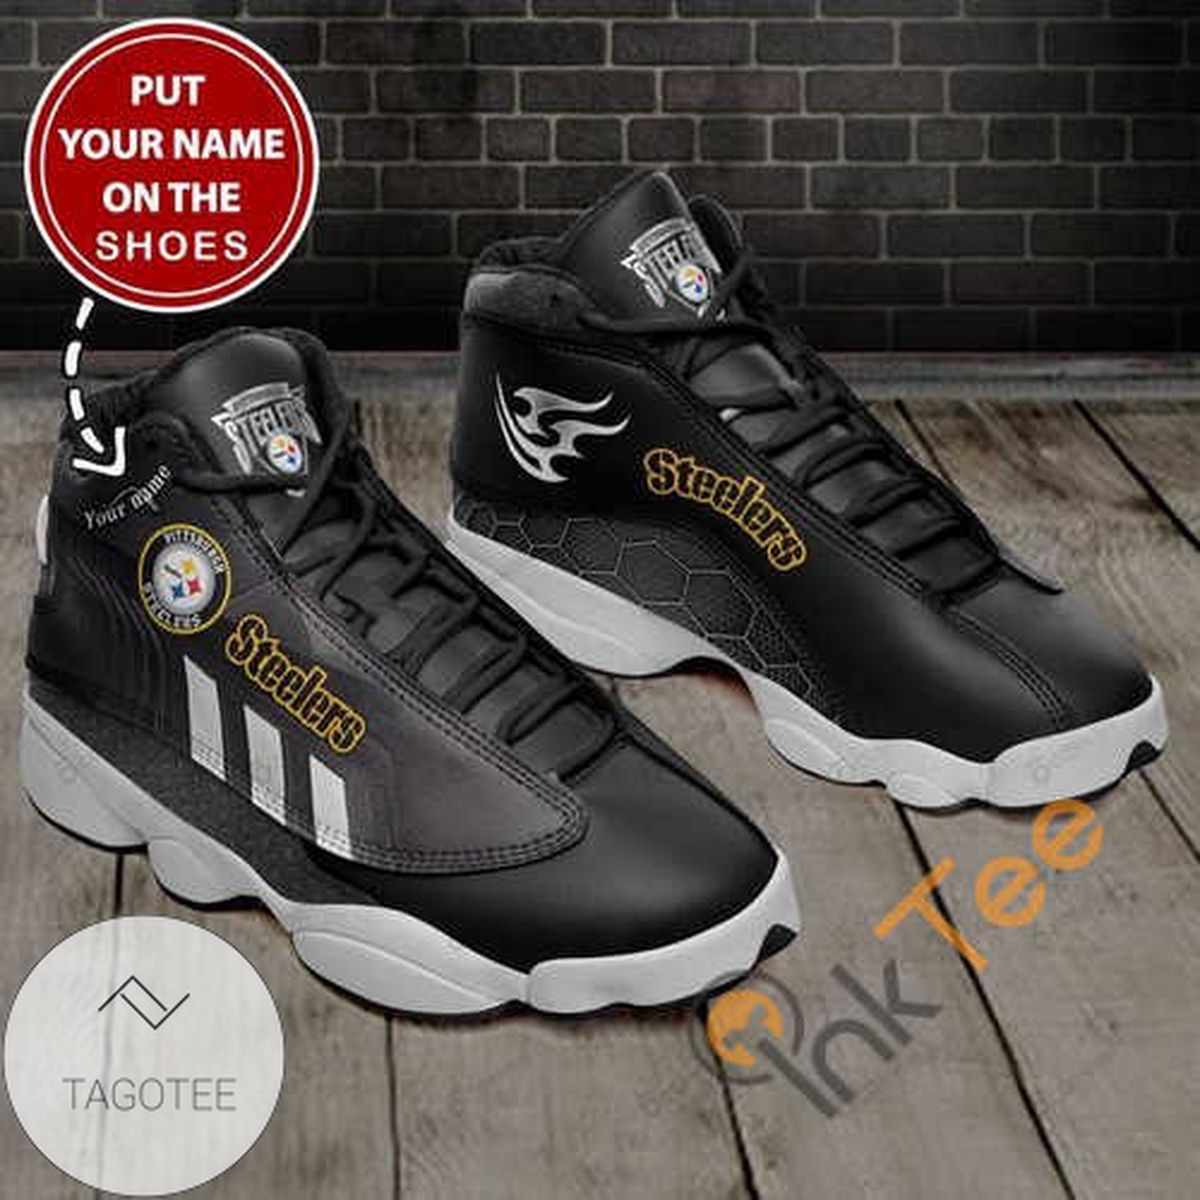 Top Rated Pittsburgh Steelers 13 Personalized Air Jordan 13 Shoes Sneakers